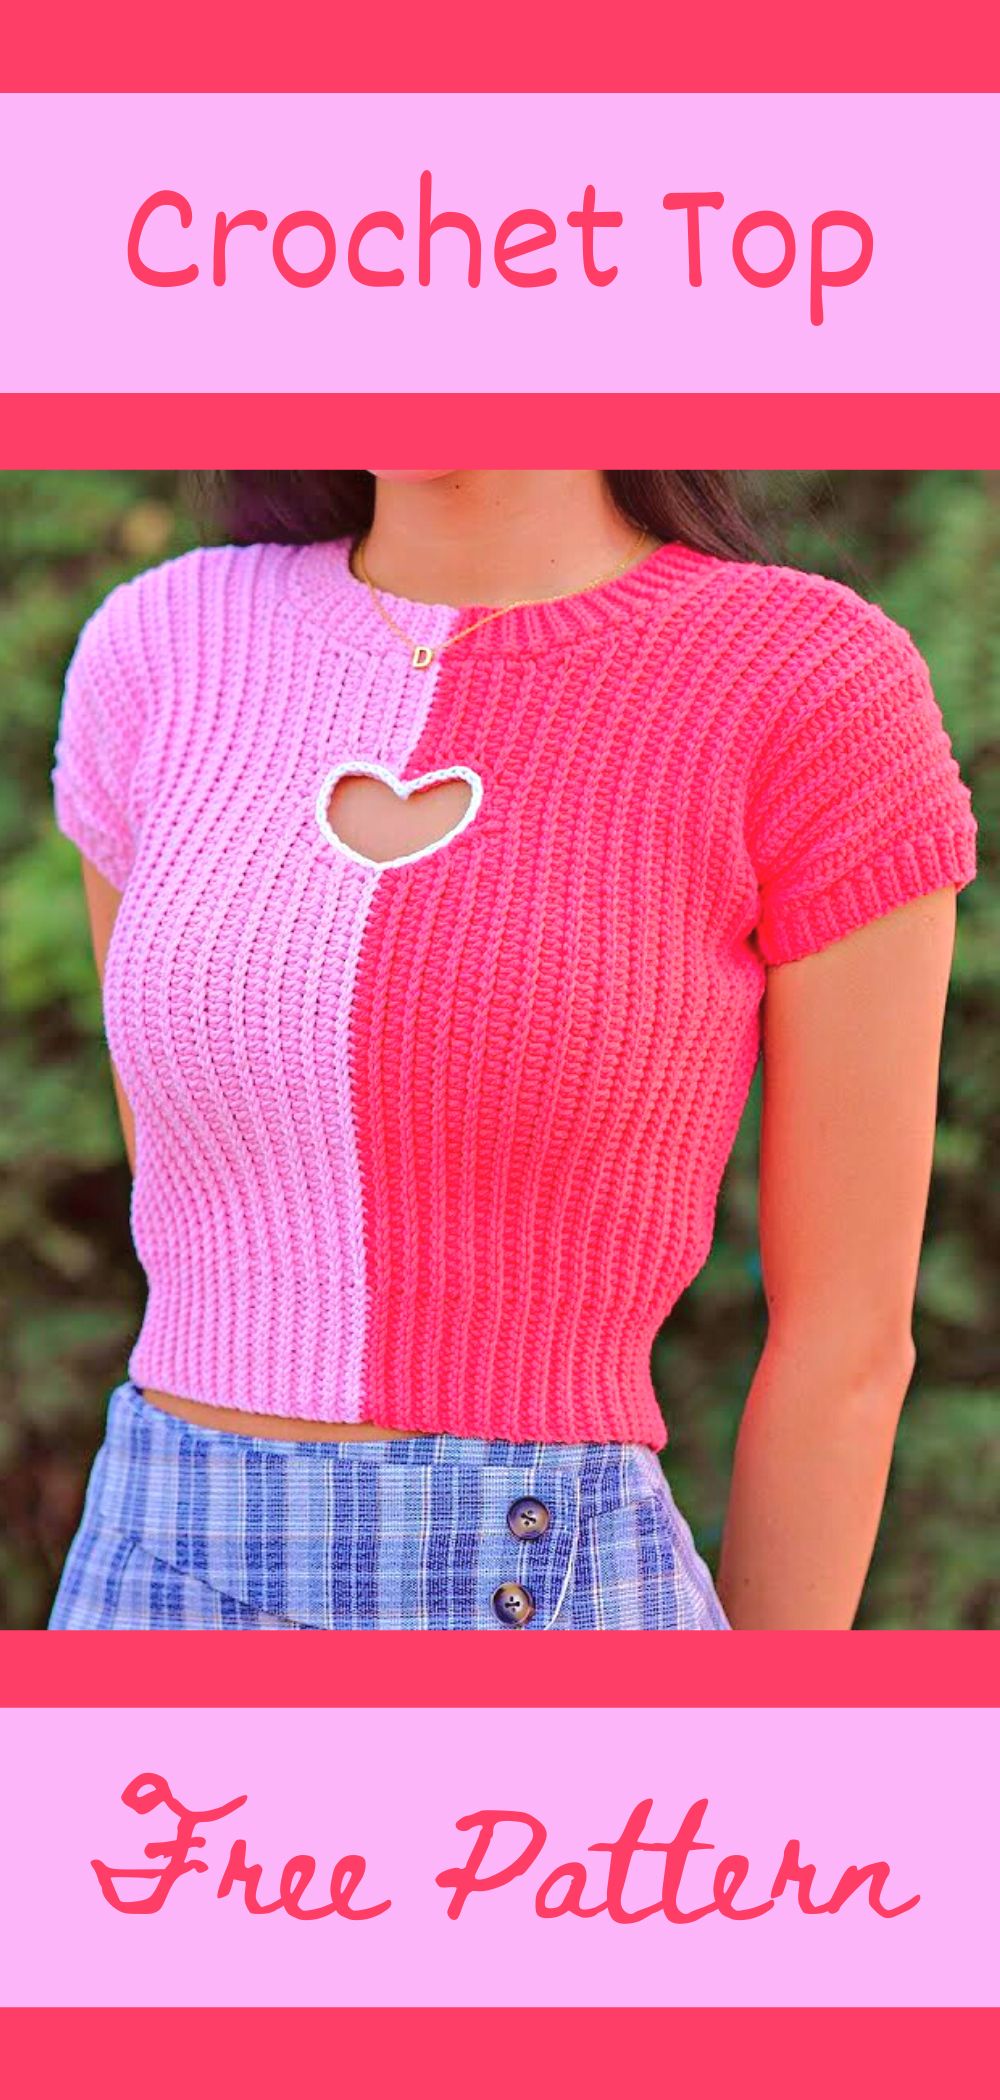 The image of Crochet The Women's Heart Top